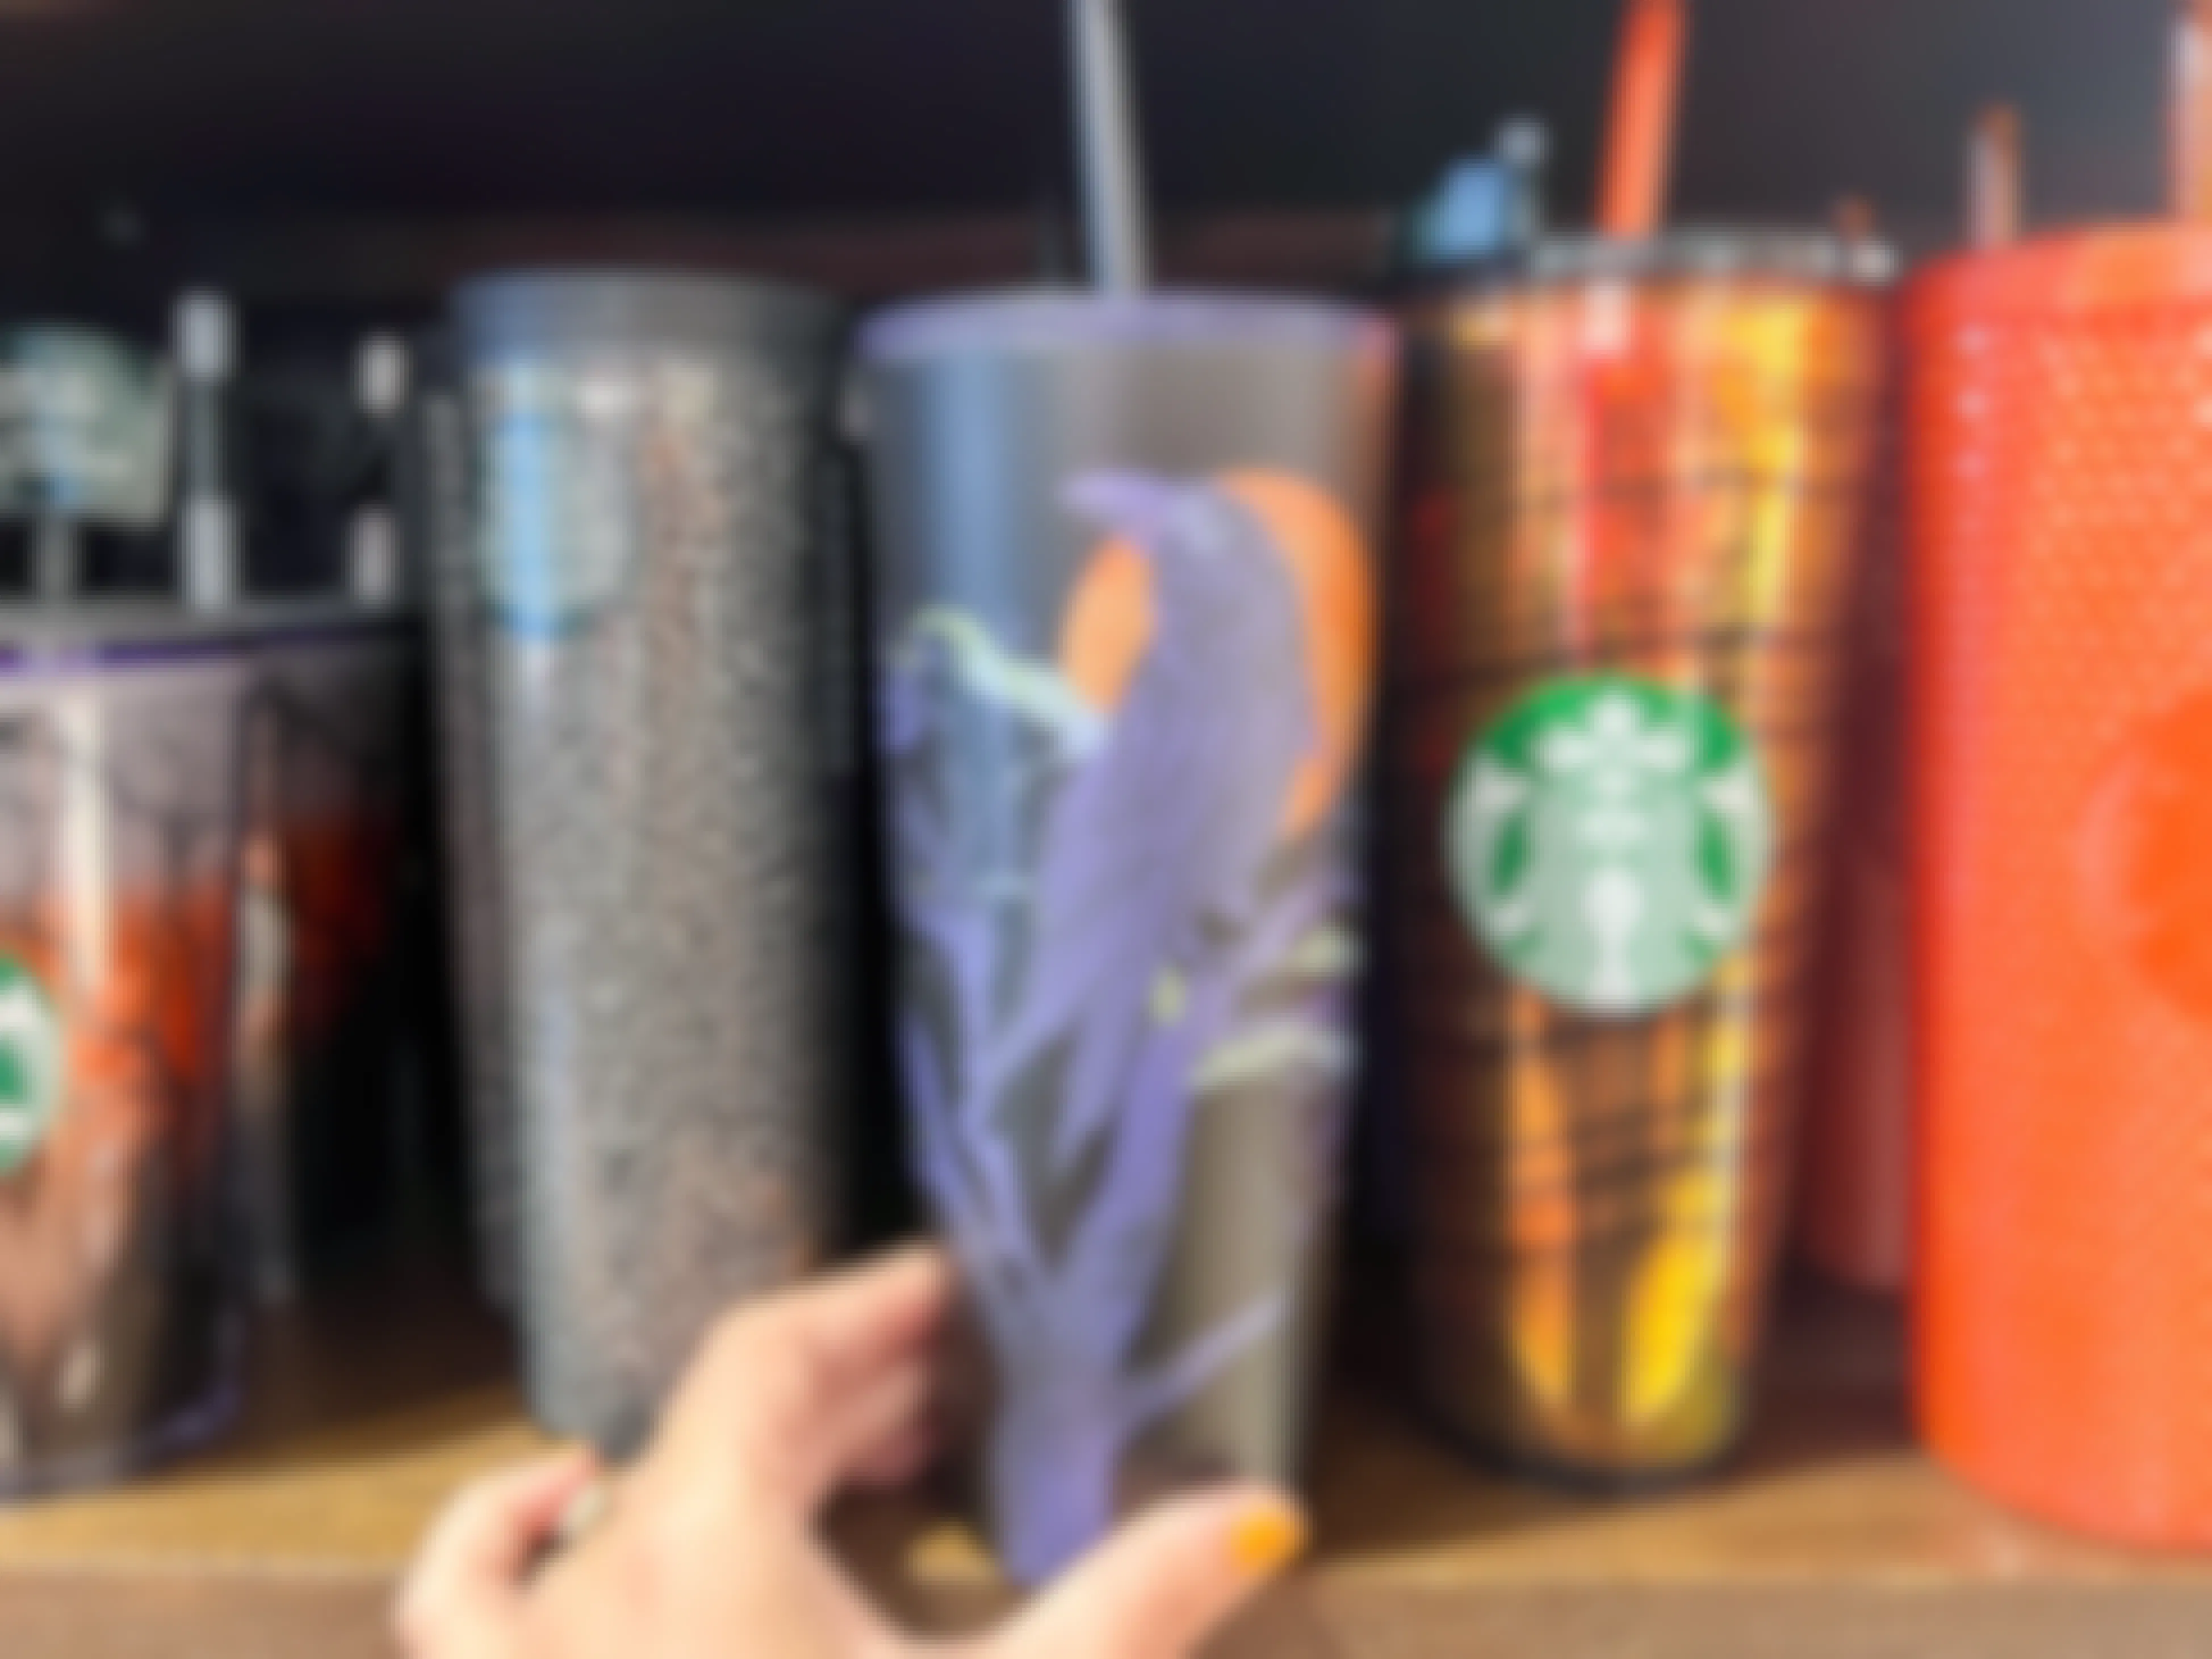 A Raven Starbucks cup on a shelf in Starbucks.